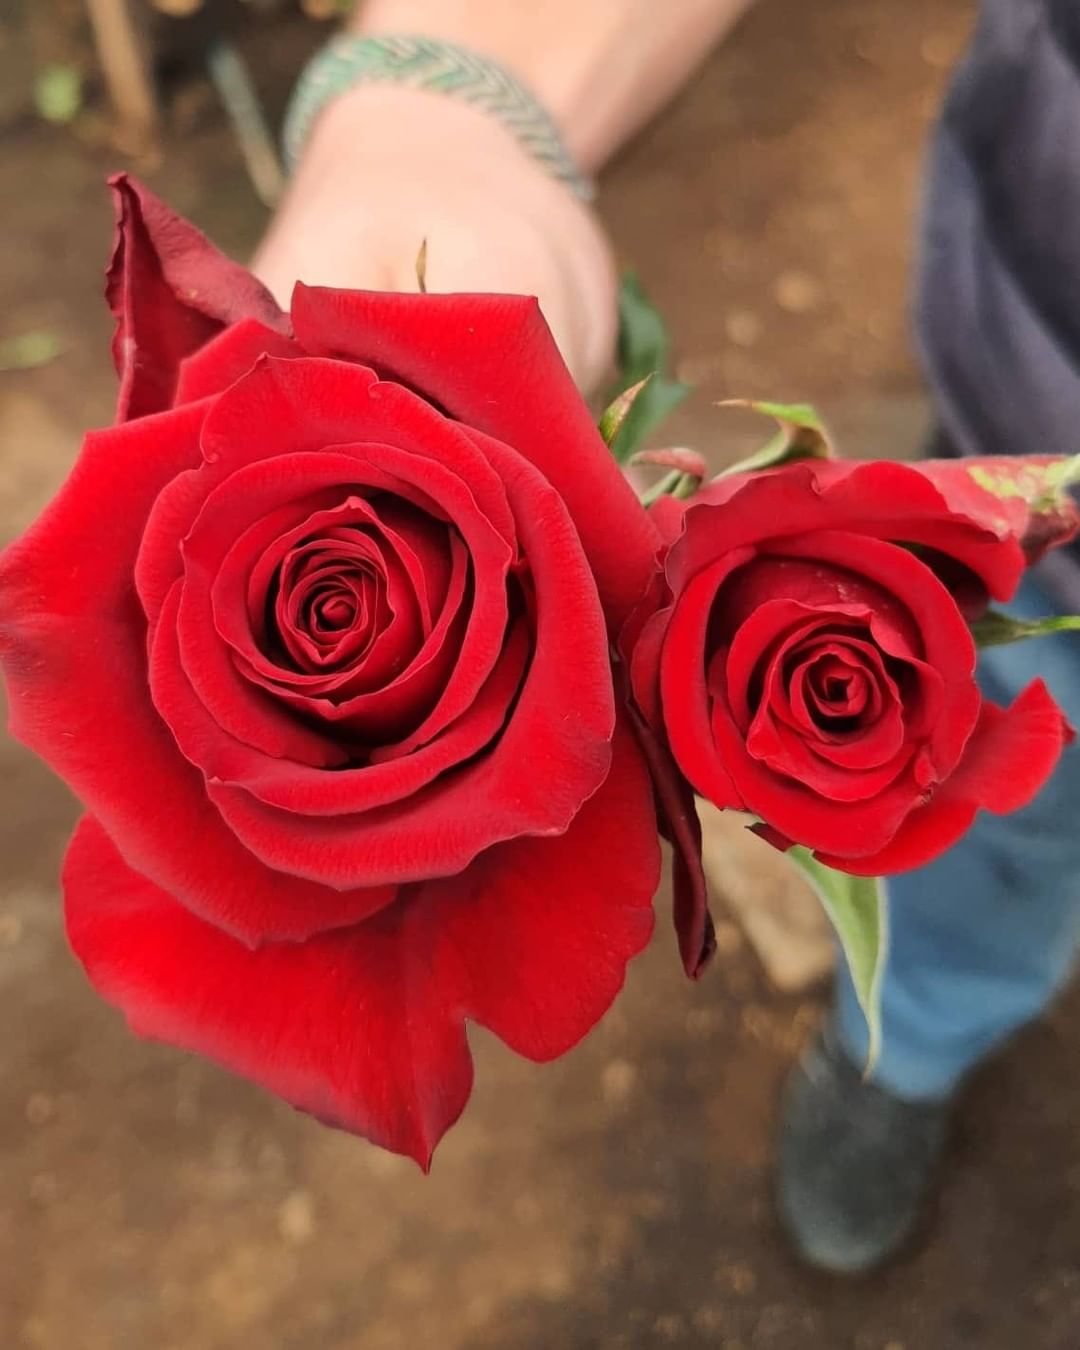 Born Free roses De Ruiter Innovations Ecuador - on Thursd